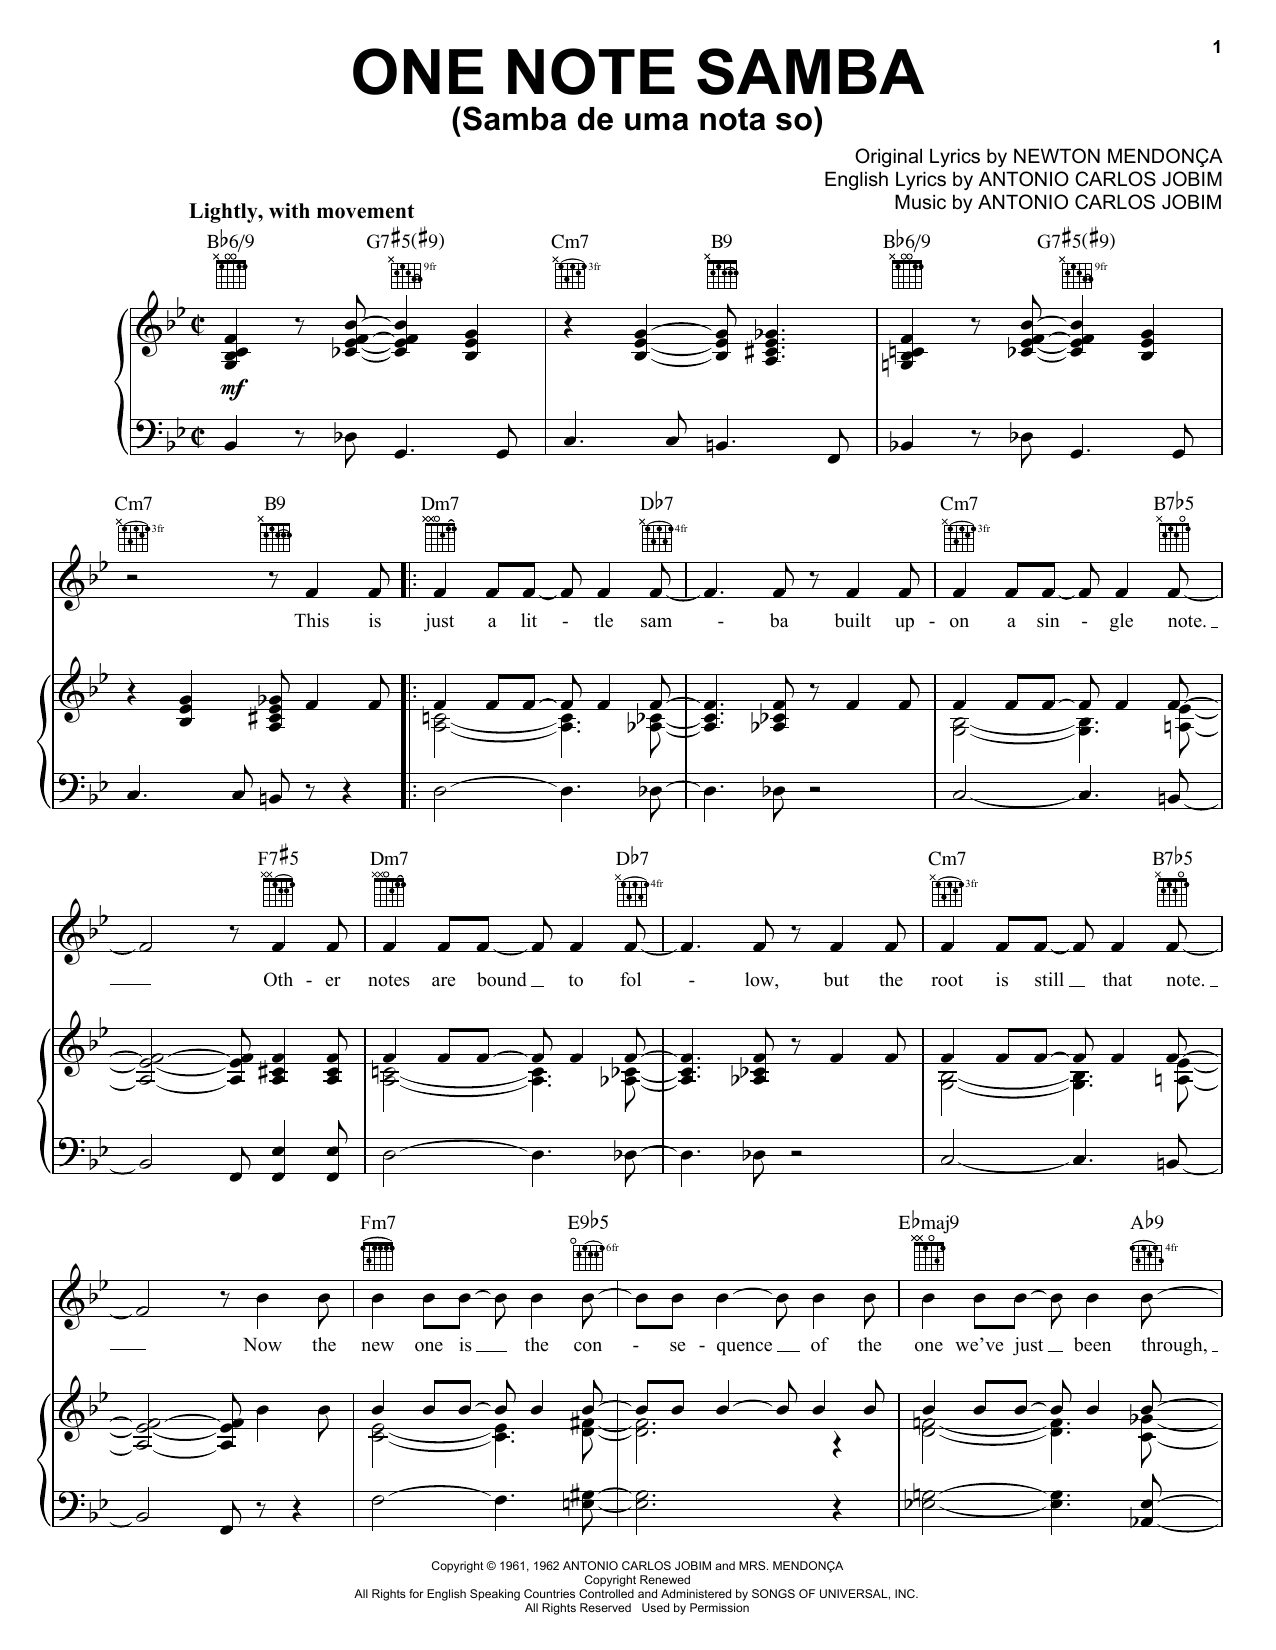 Download Antonio Carlos Jobim One Note Samba (Samba De Uma Nota So) Sheet Music and learn how to play Tenor Saxophone PDF digital score in minutes